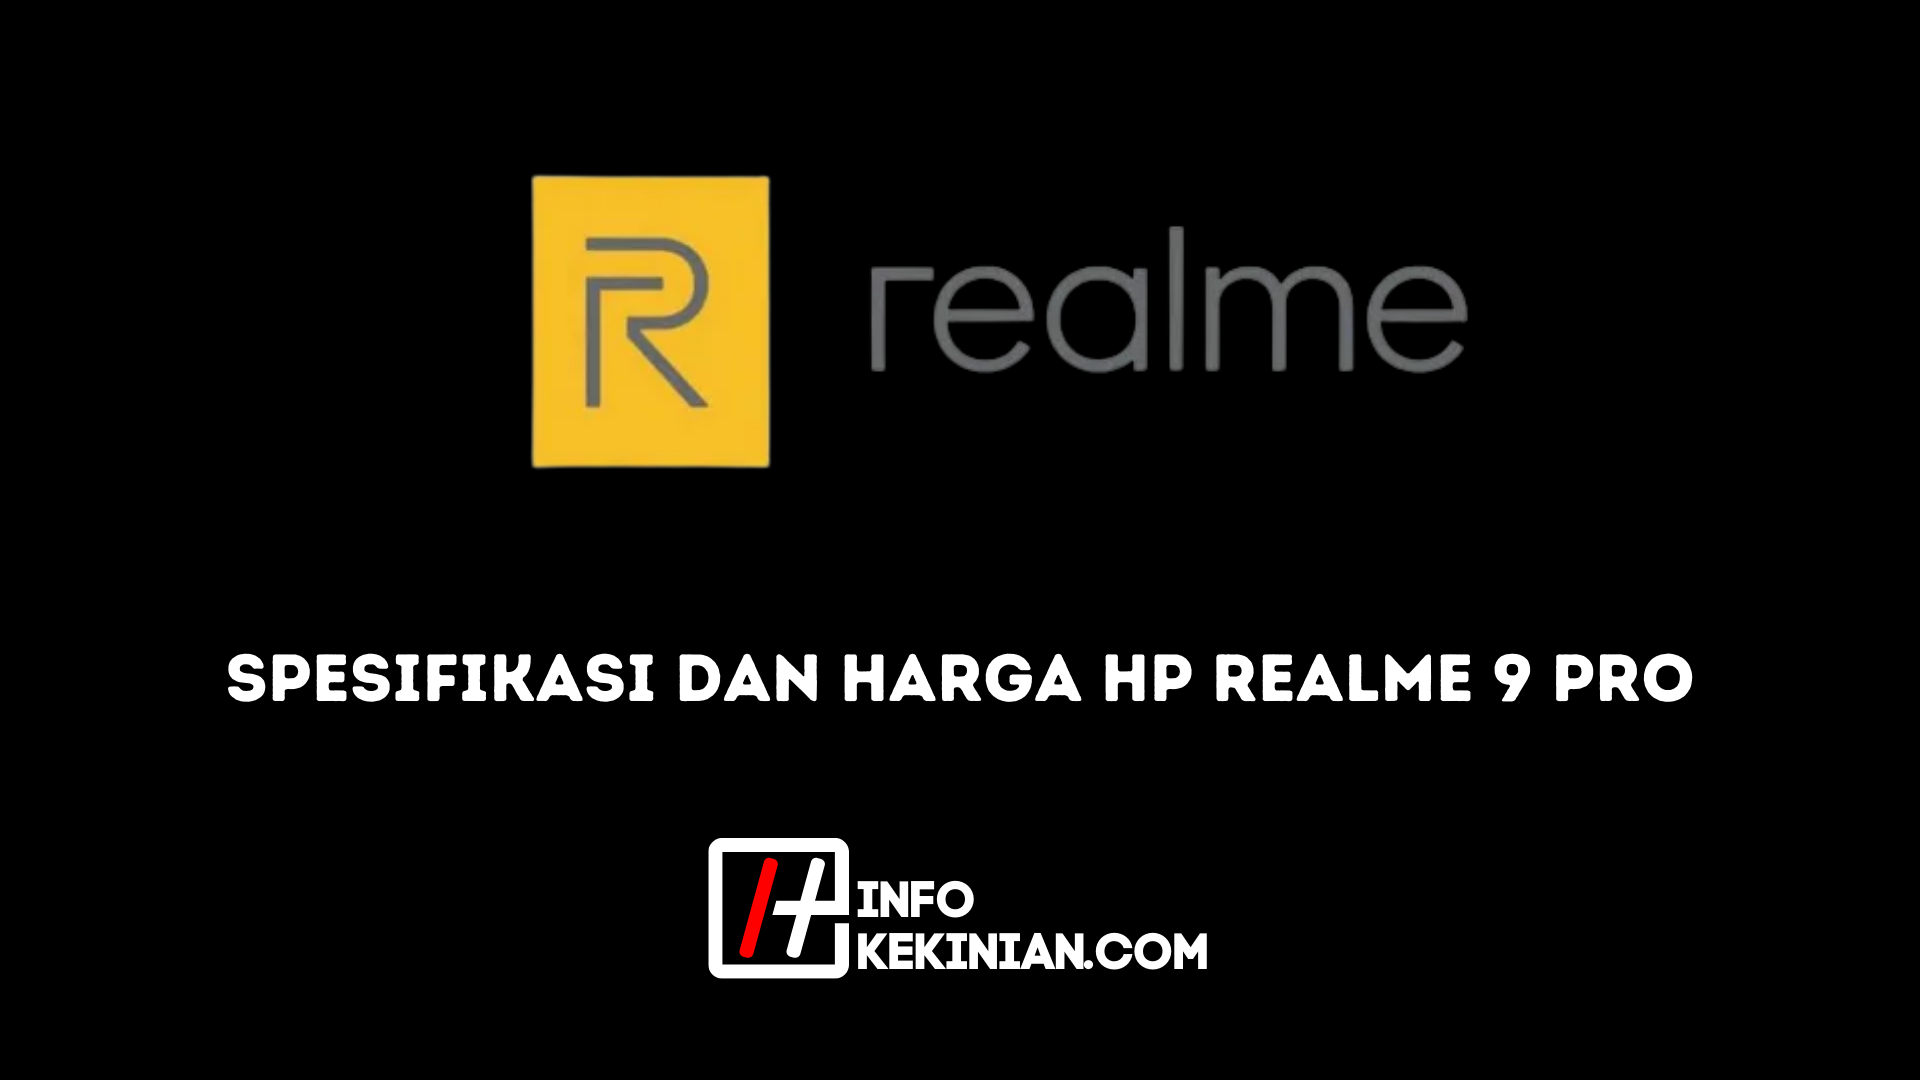 Dane techniczne i cena Realme 9 Pro